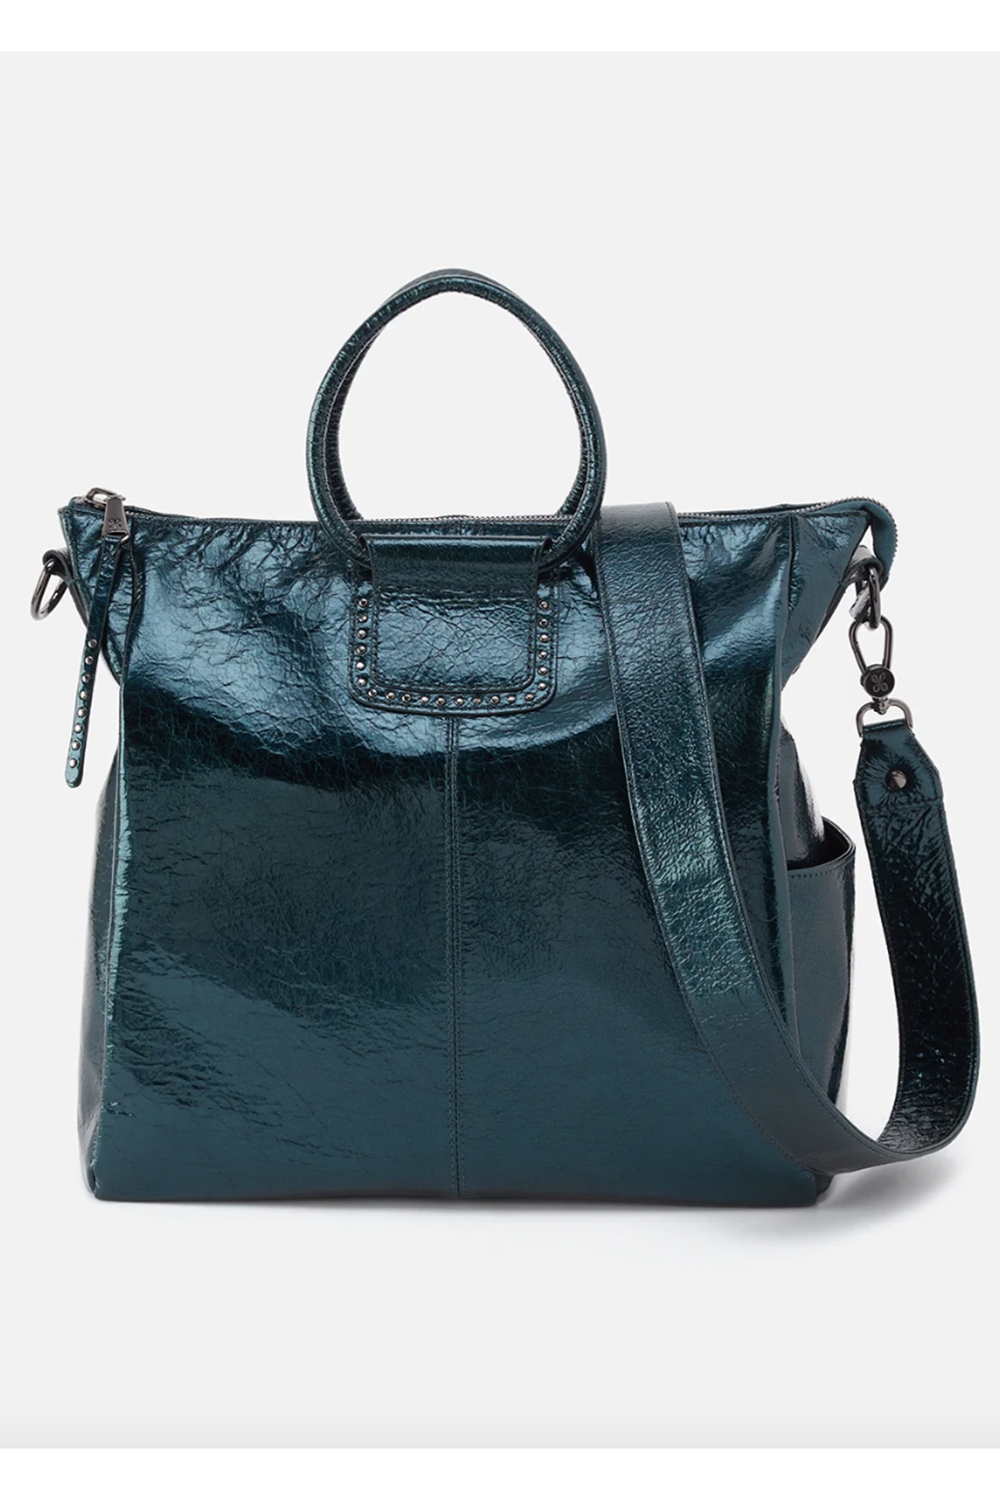 SIDEWALK SALE ITEM - Sheila Tote Bag - Patent Leather Spruce